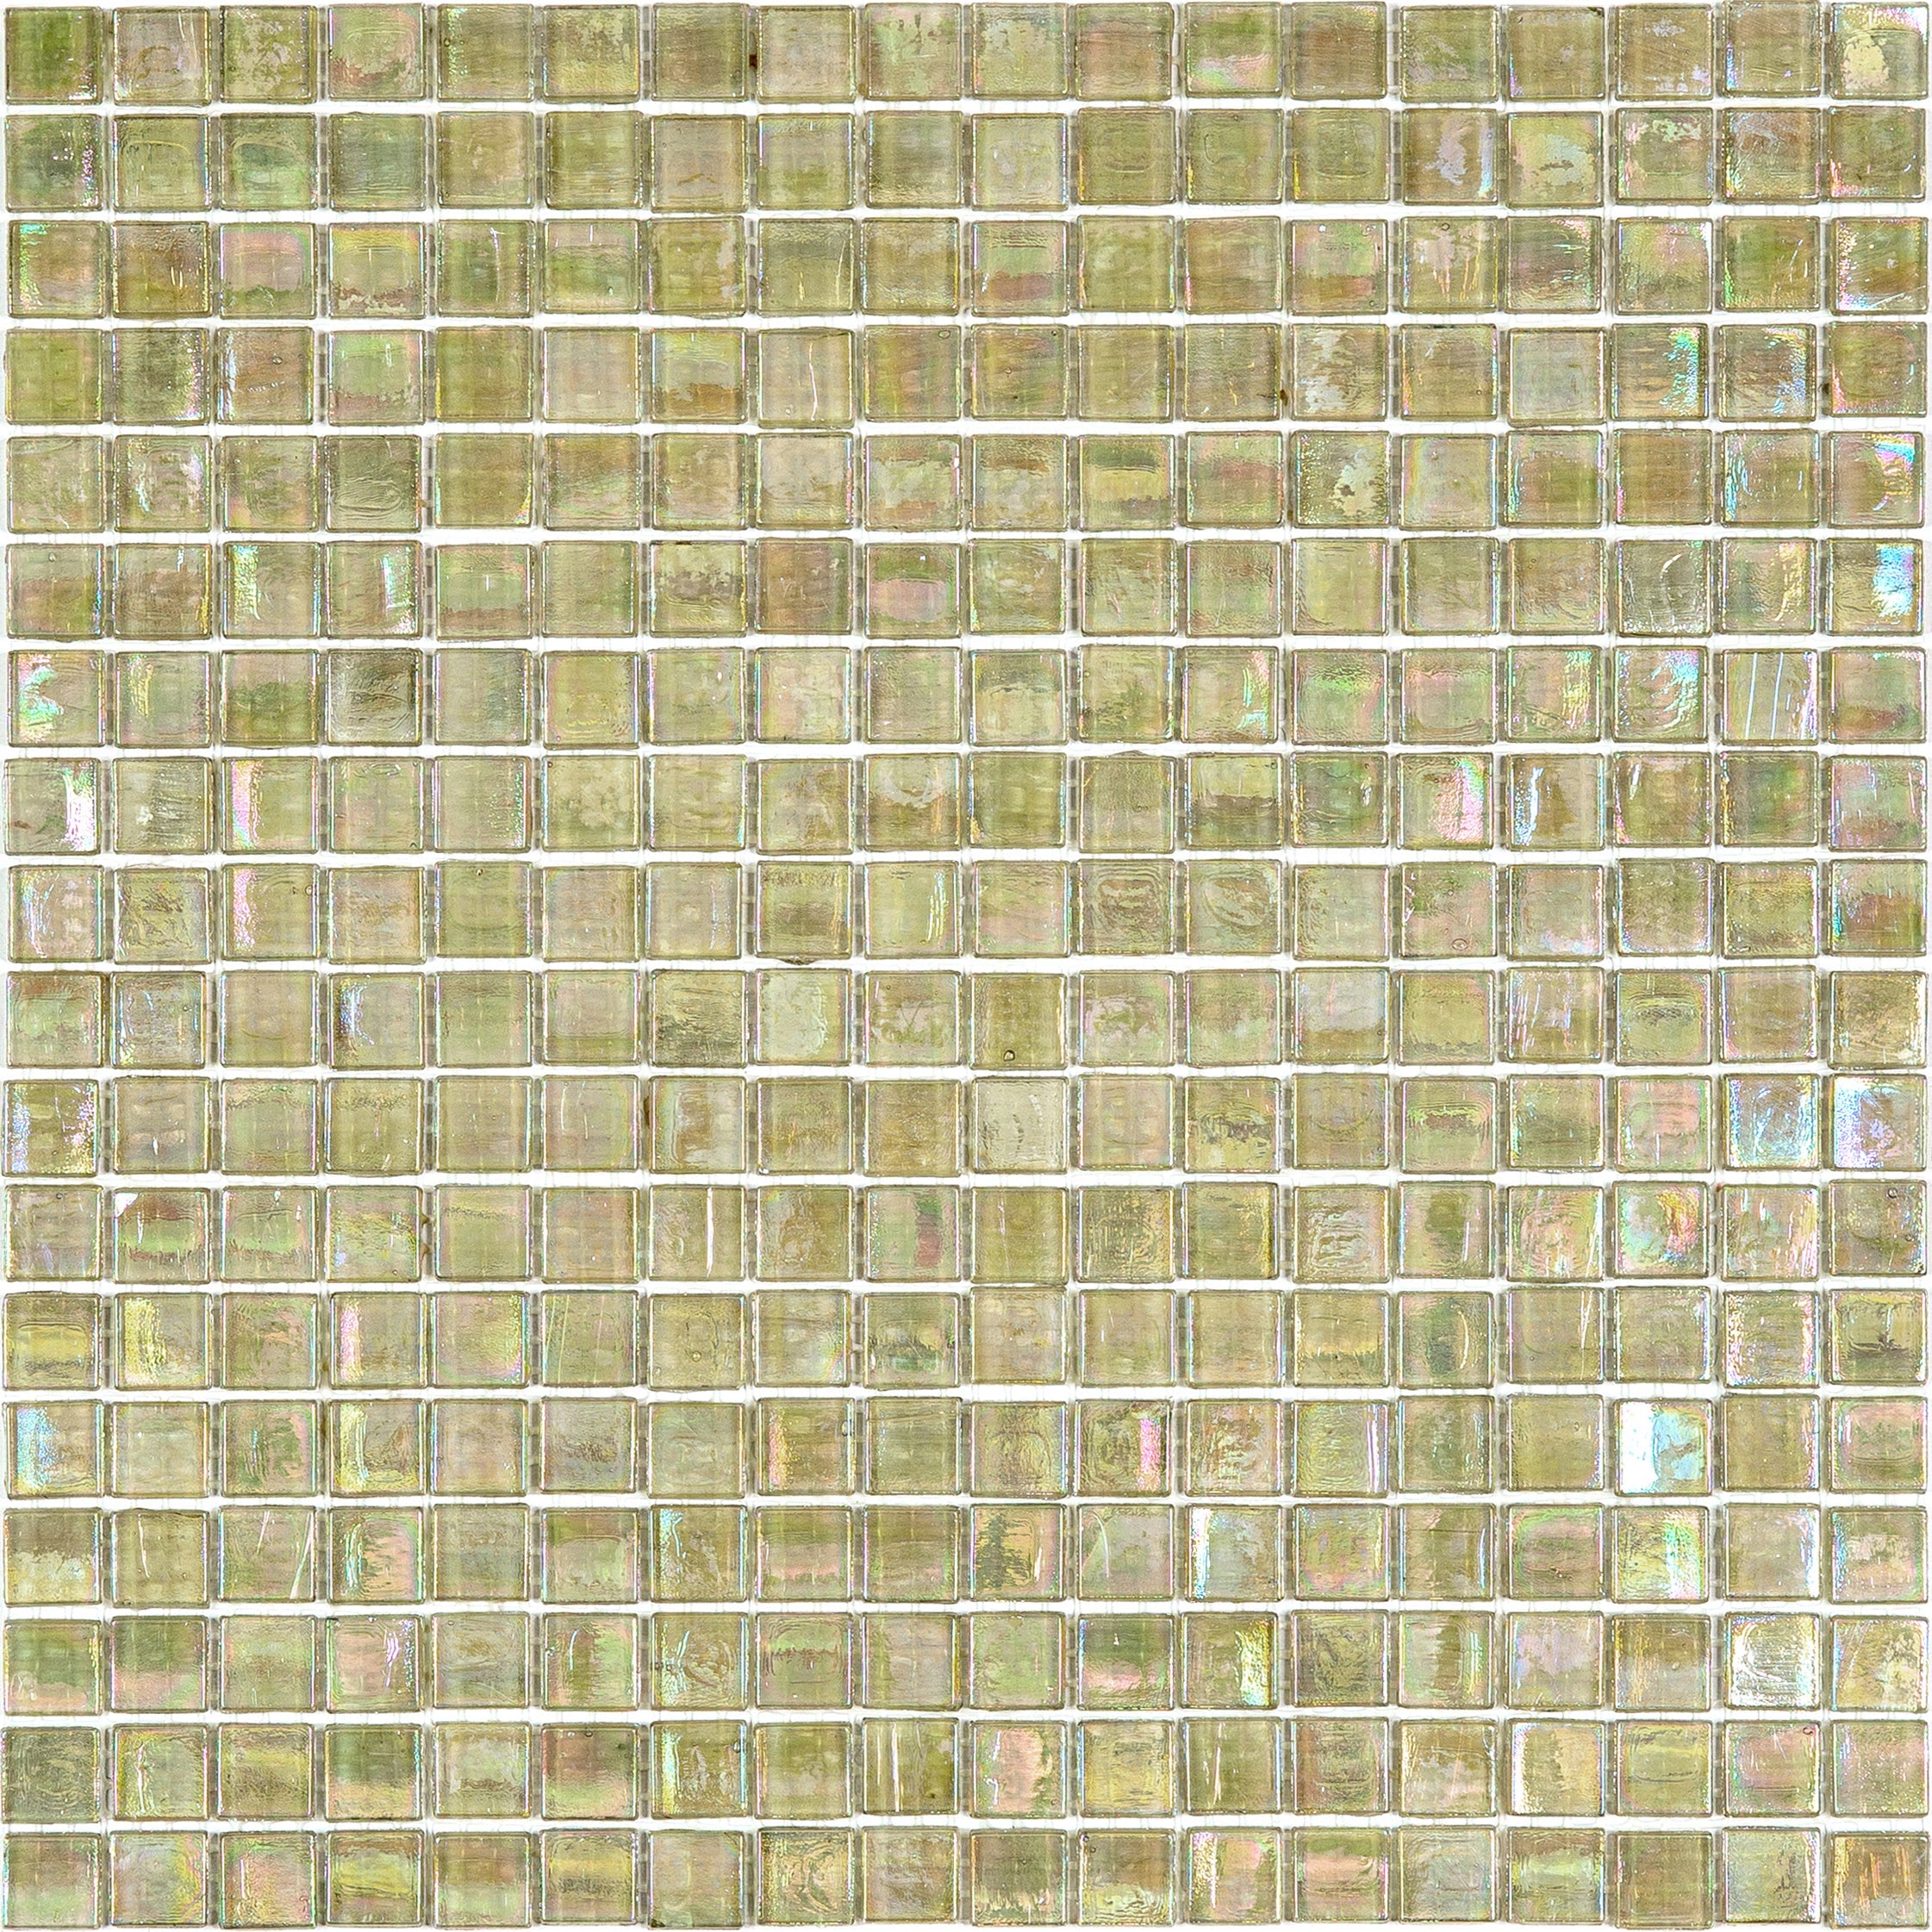 mir alma solid colors 0_6 inch nibble ng04 wall and floor mosaic distributed by surface group natural materials